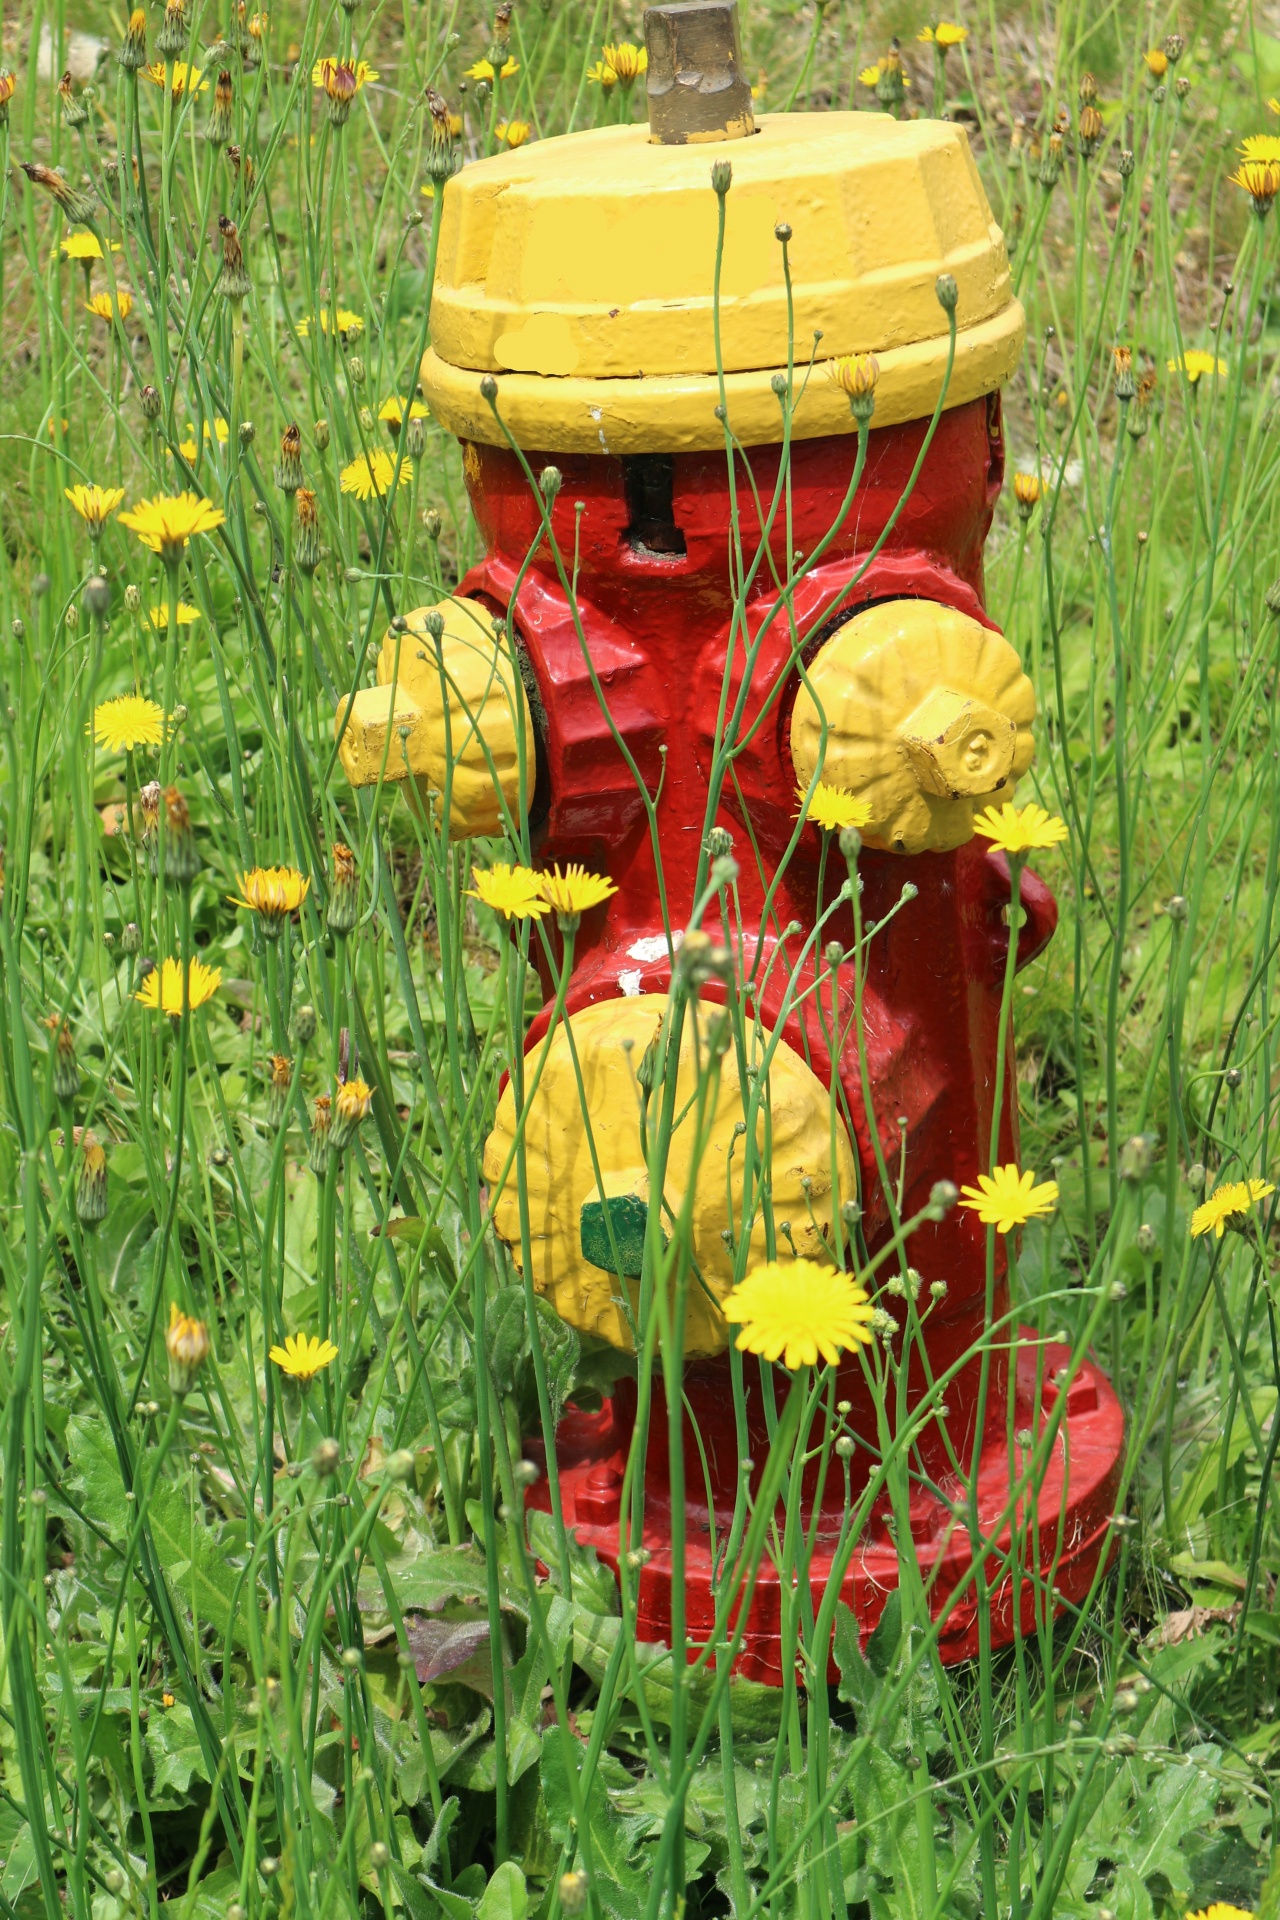 hydrant small yellow free photo